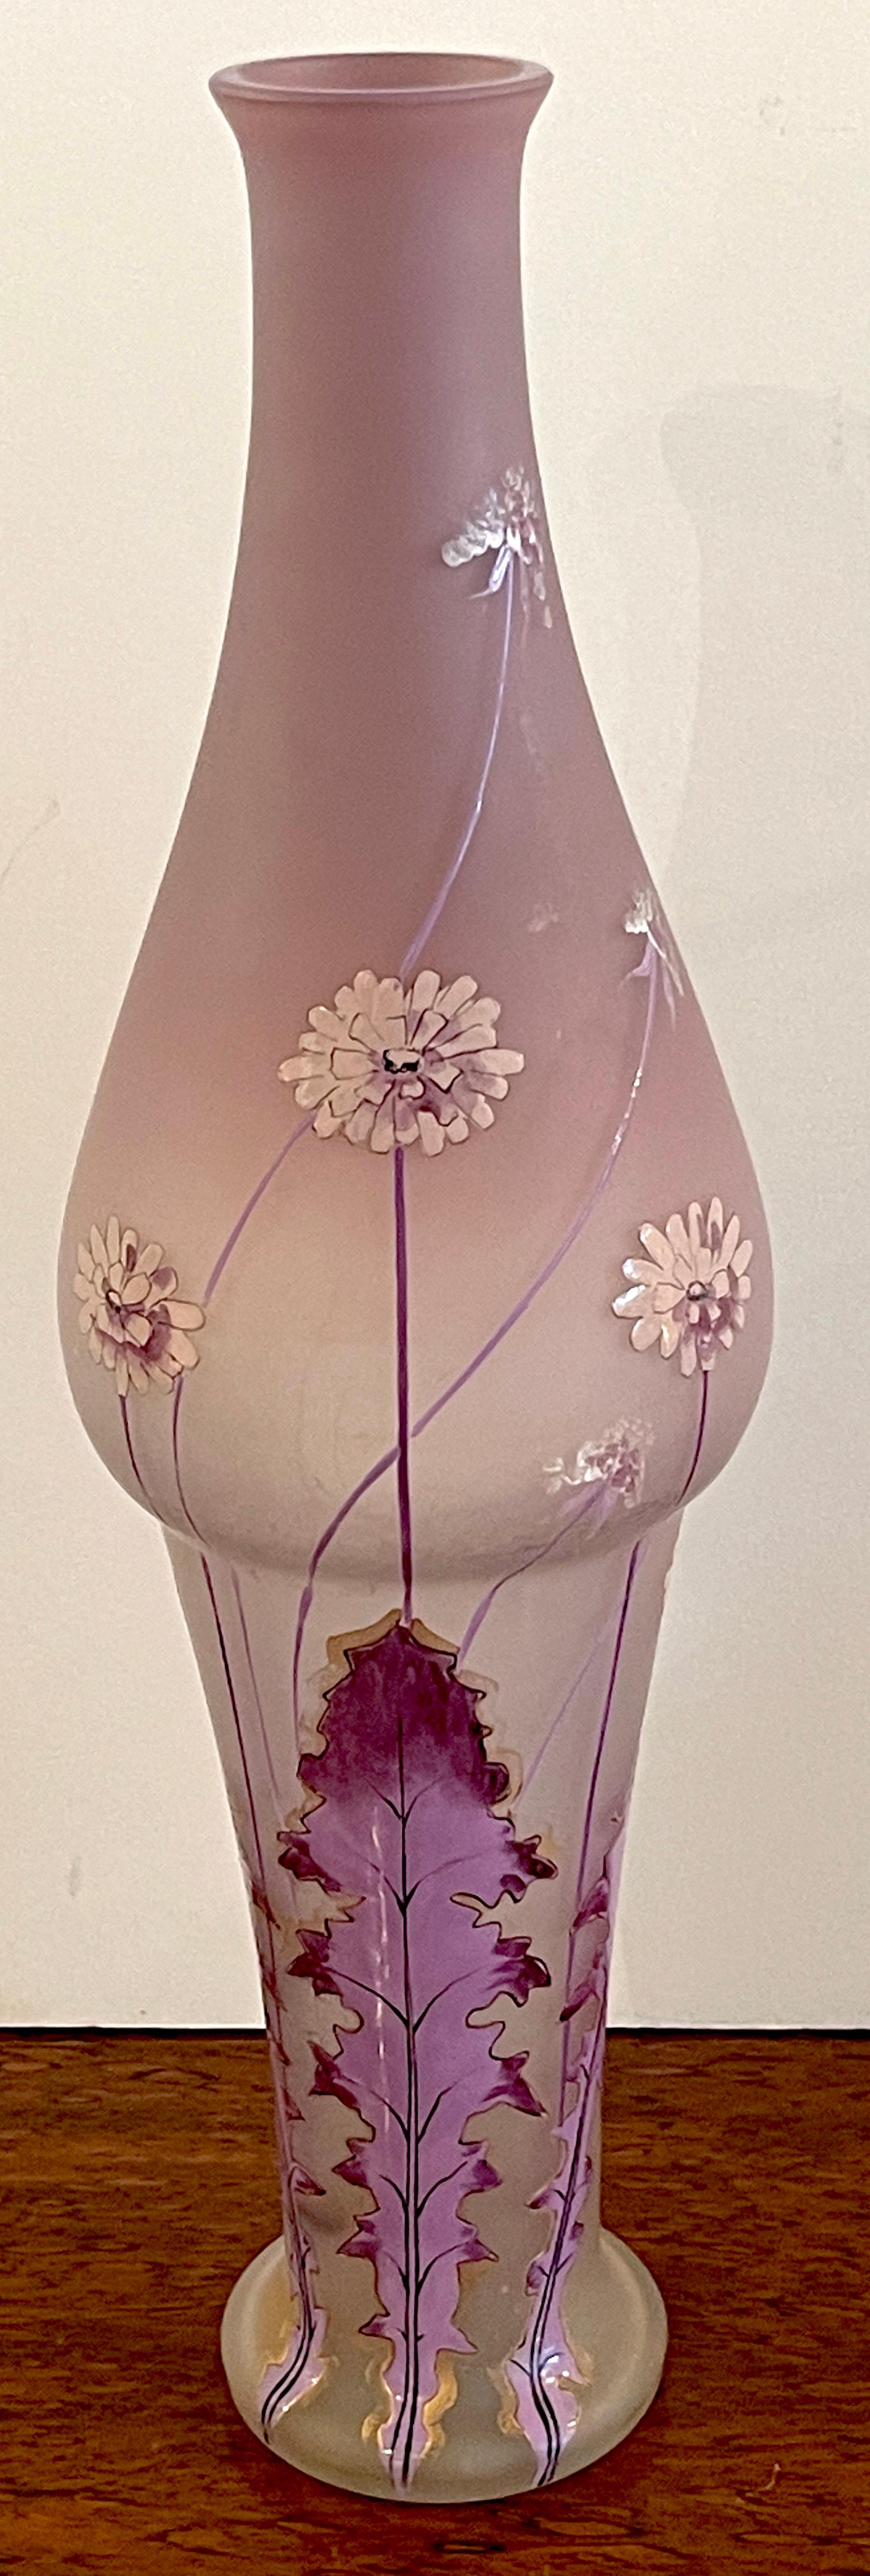 20th Century Art Nouveau Lavender Dandelion Enameled Vase, Attributed to Mont Joye, France For Sale